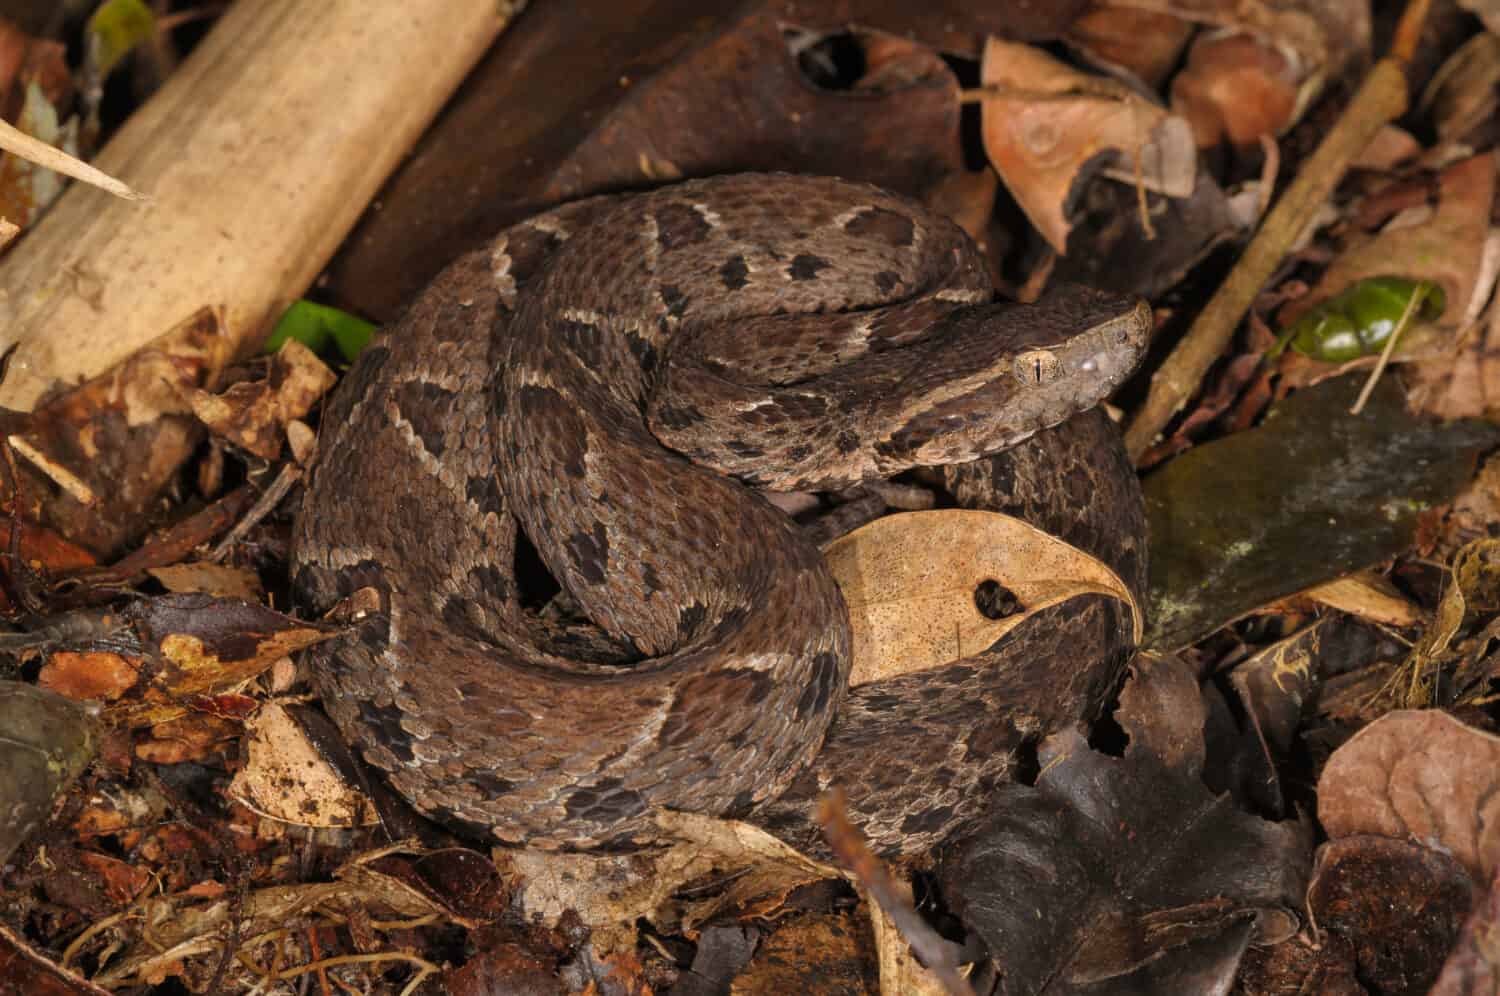 Jararacussu snake (bothrops Jararacussu) 